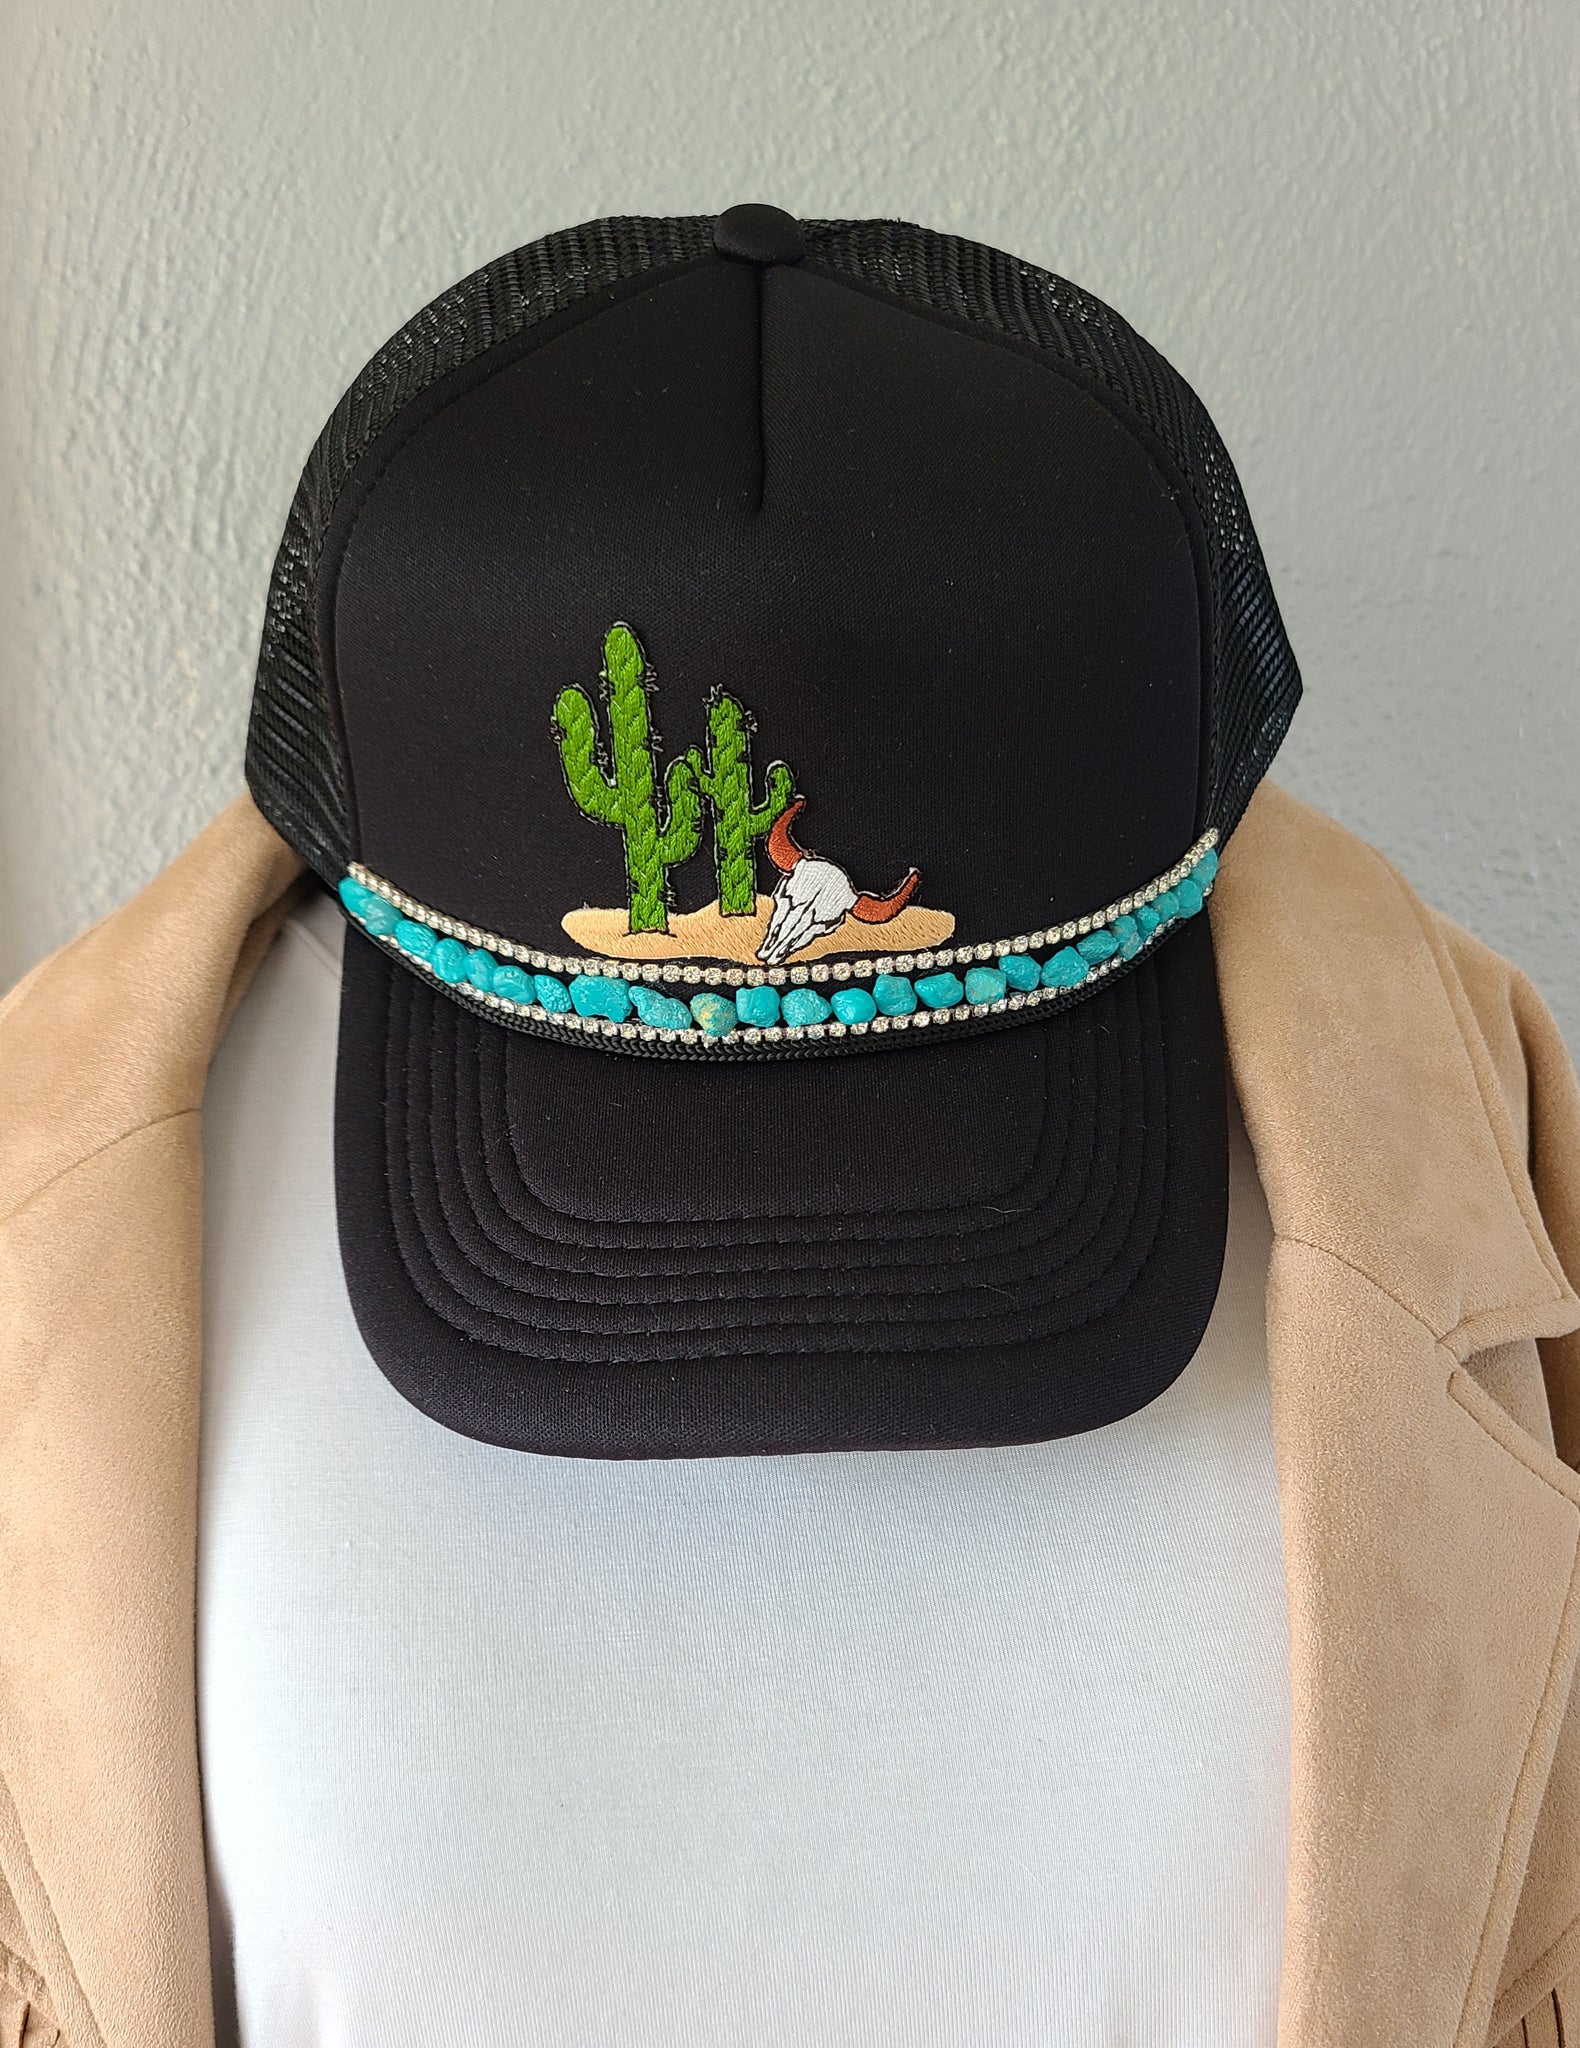 Cactus Trucker Hat